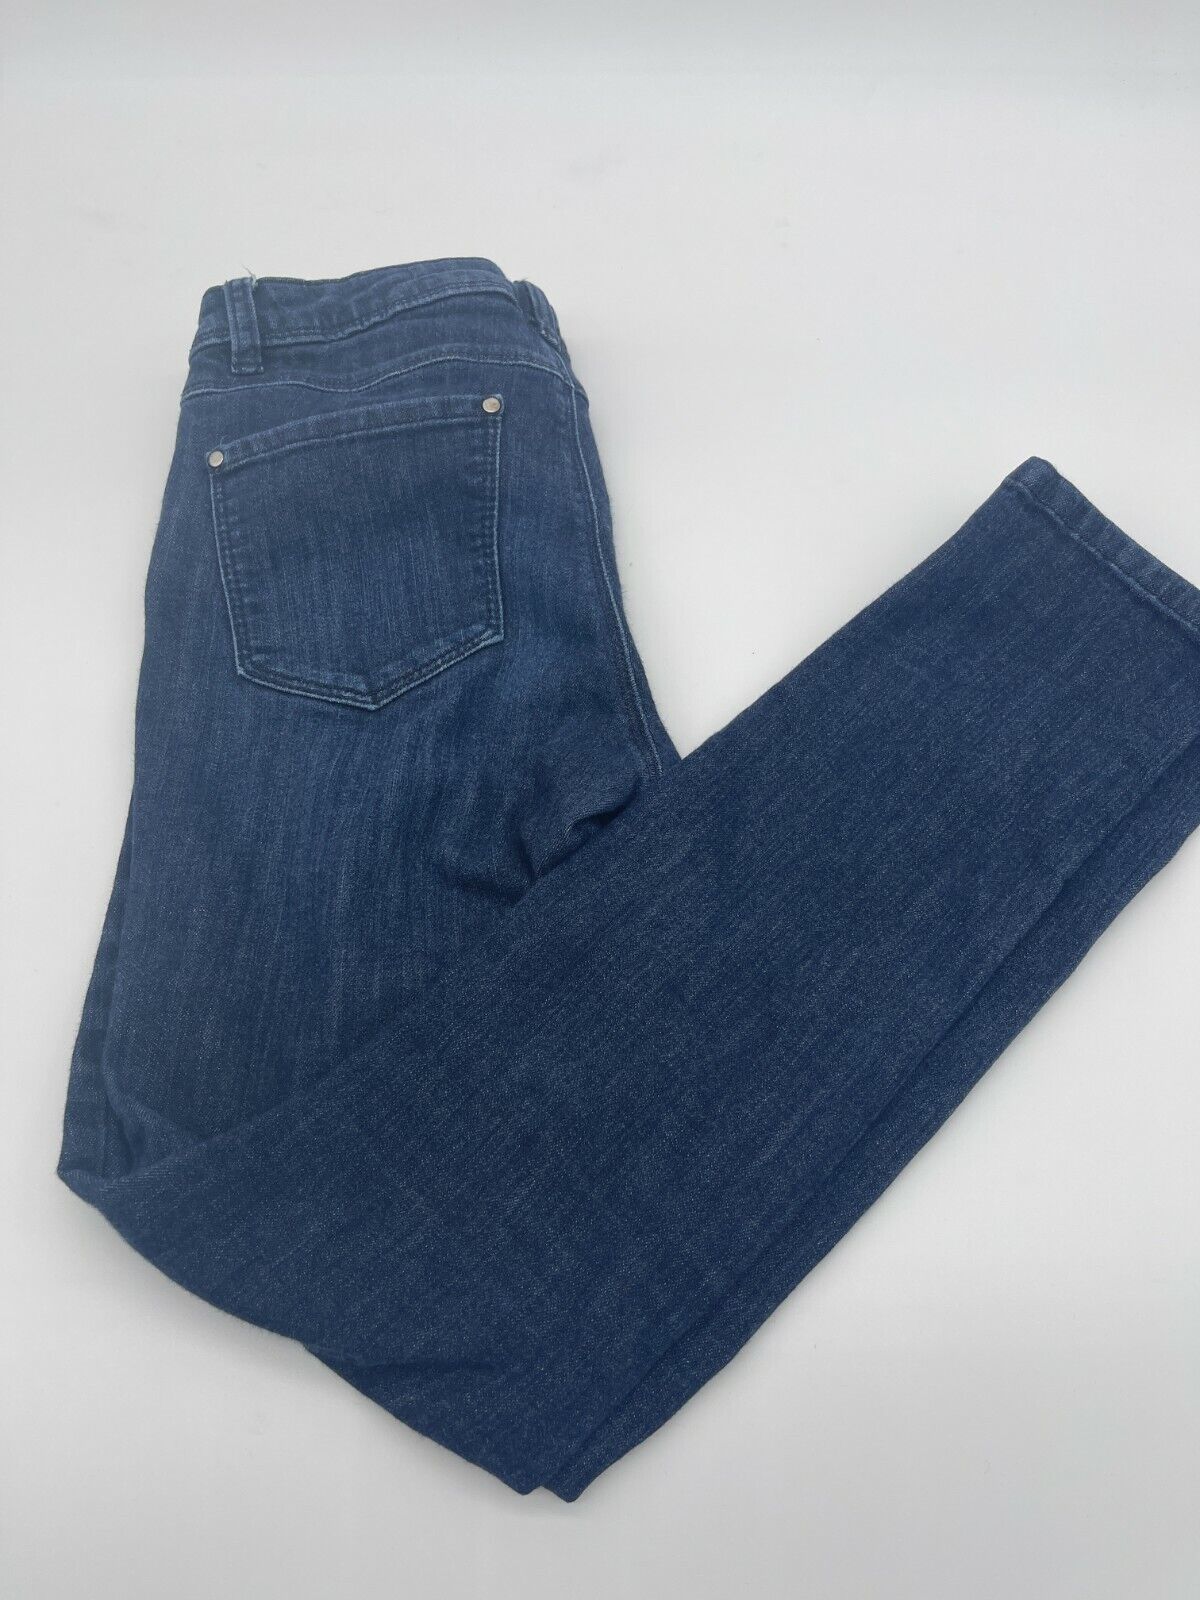 LC Lauren Conrad Jeans Skinny Jeans Sz 2 Non Faded Zip & Pockets Low Rise EUC